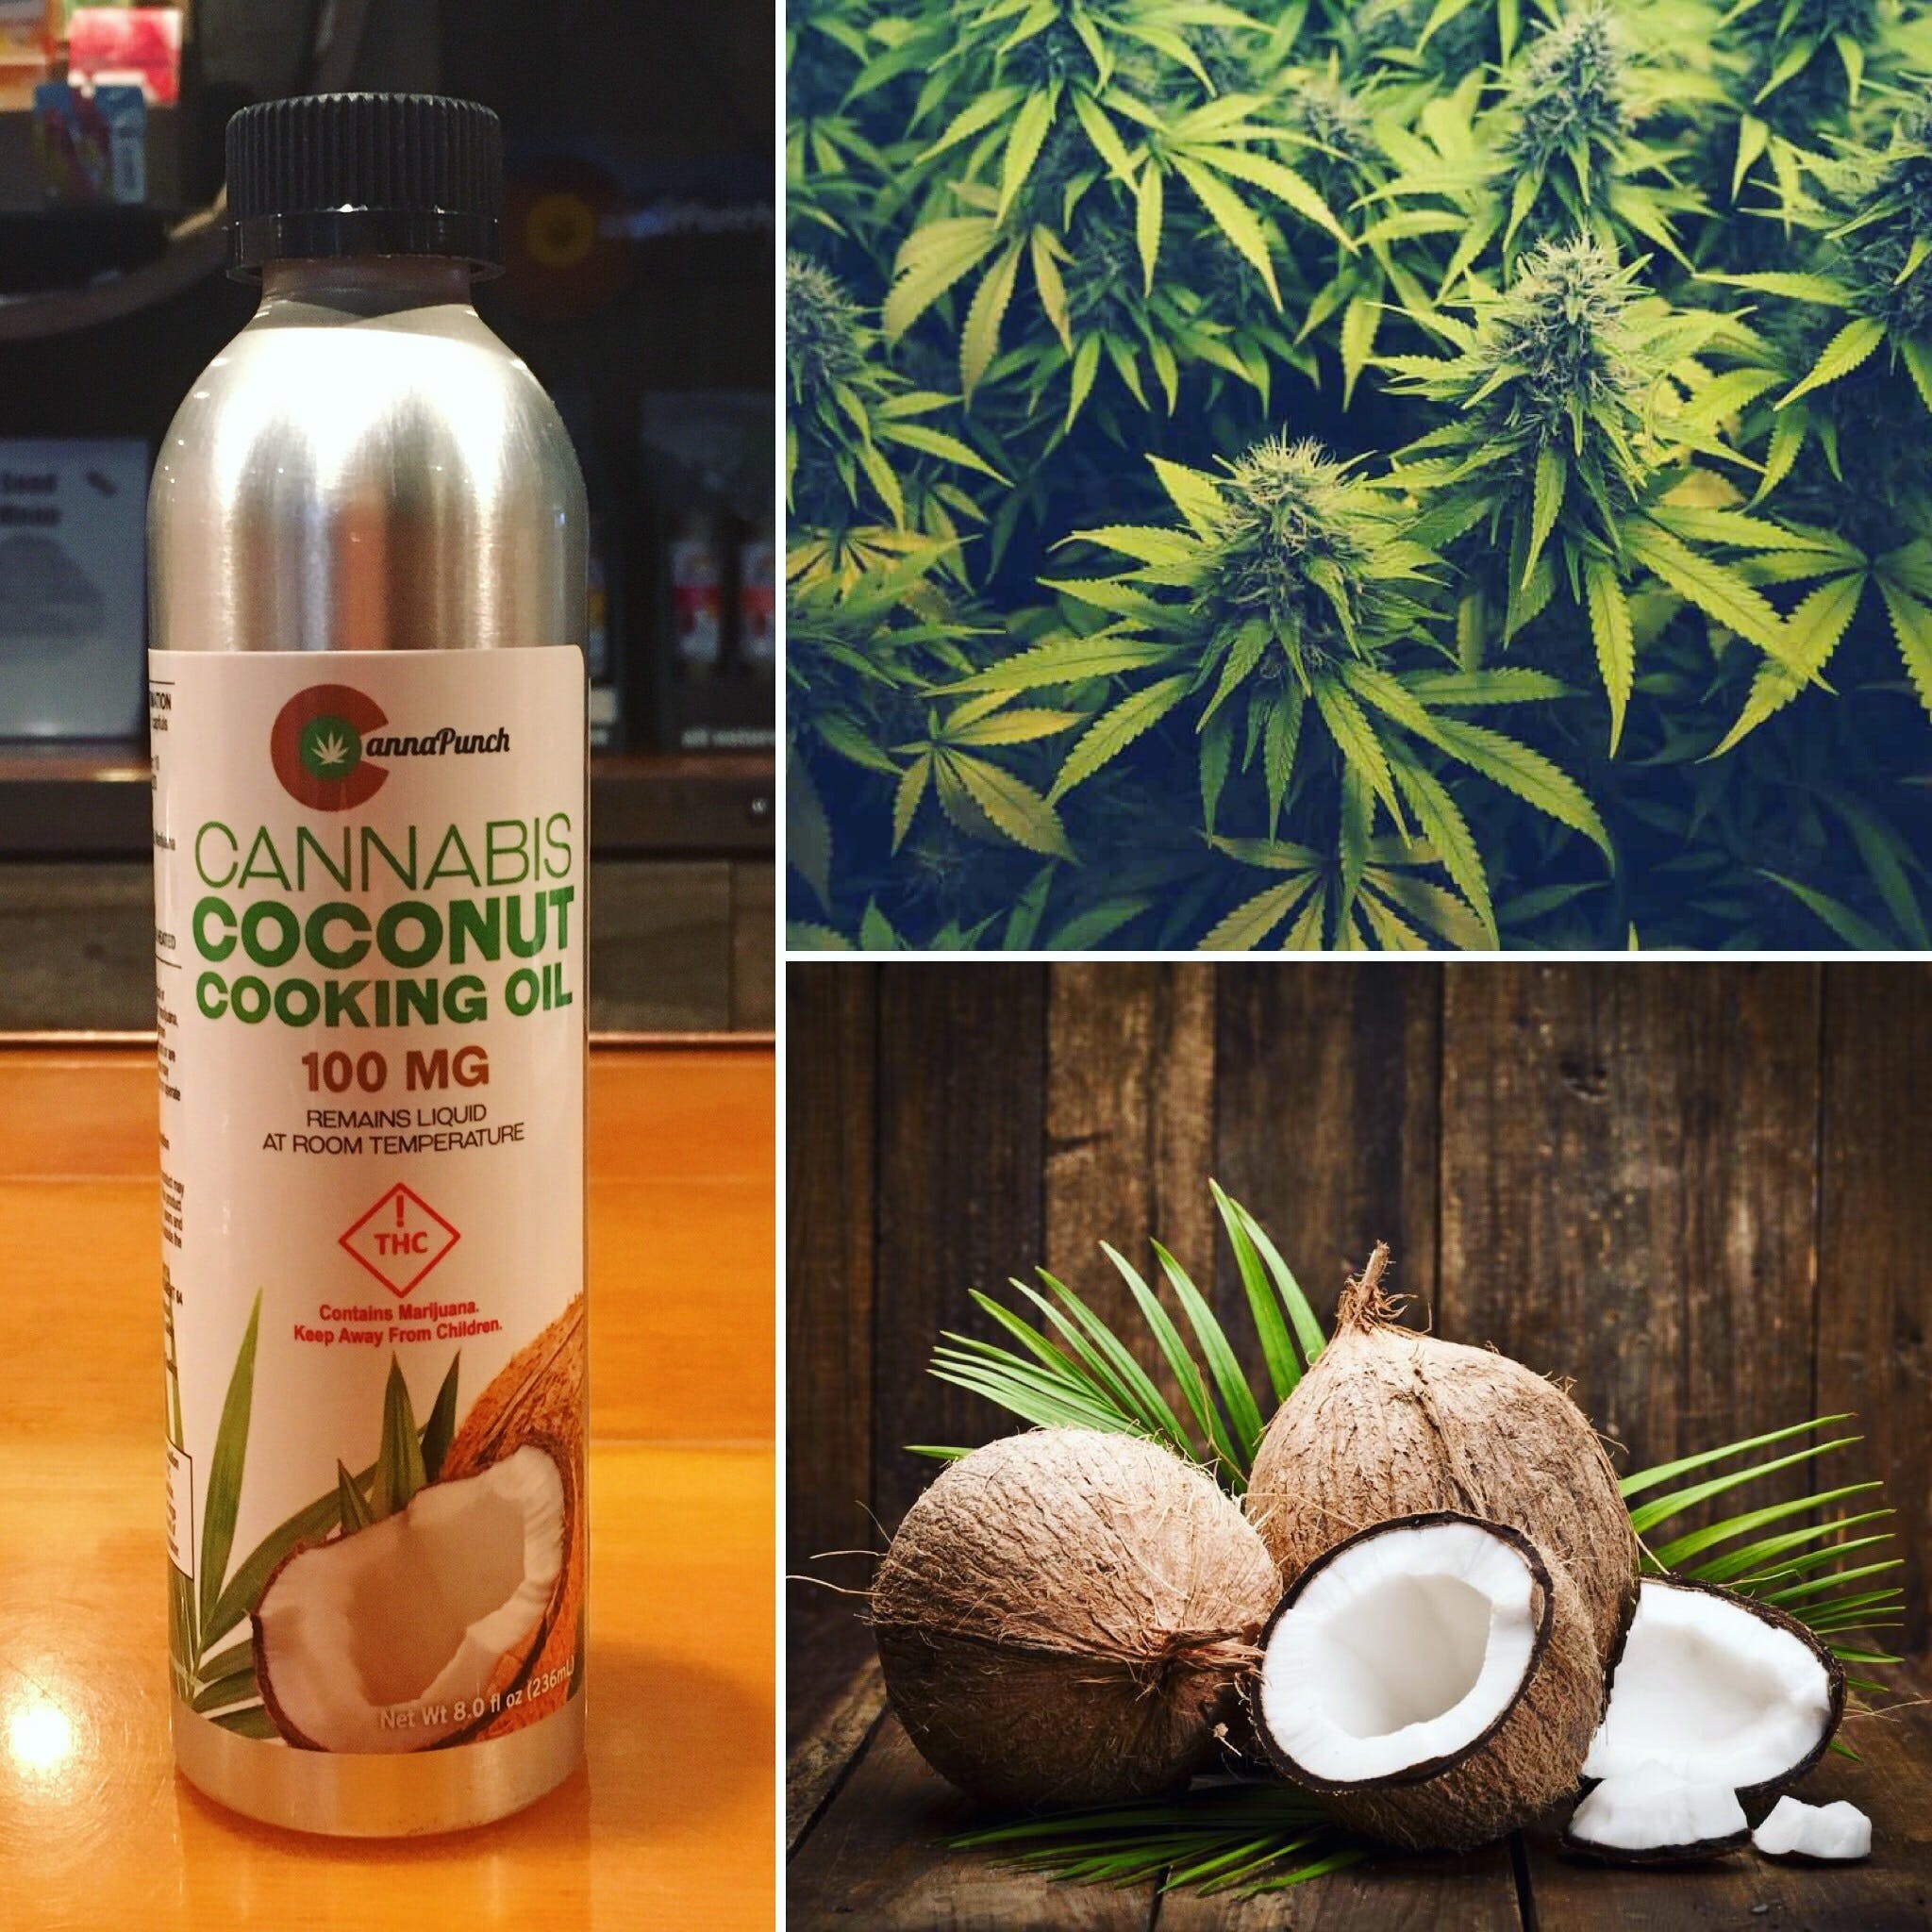 marijuana-dispensaries-tumbleweed-parachute-in-parachute-cannapunch-cannabis-coconut-cooking-oil